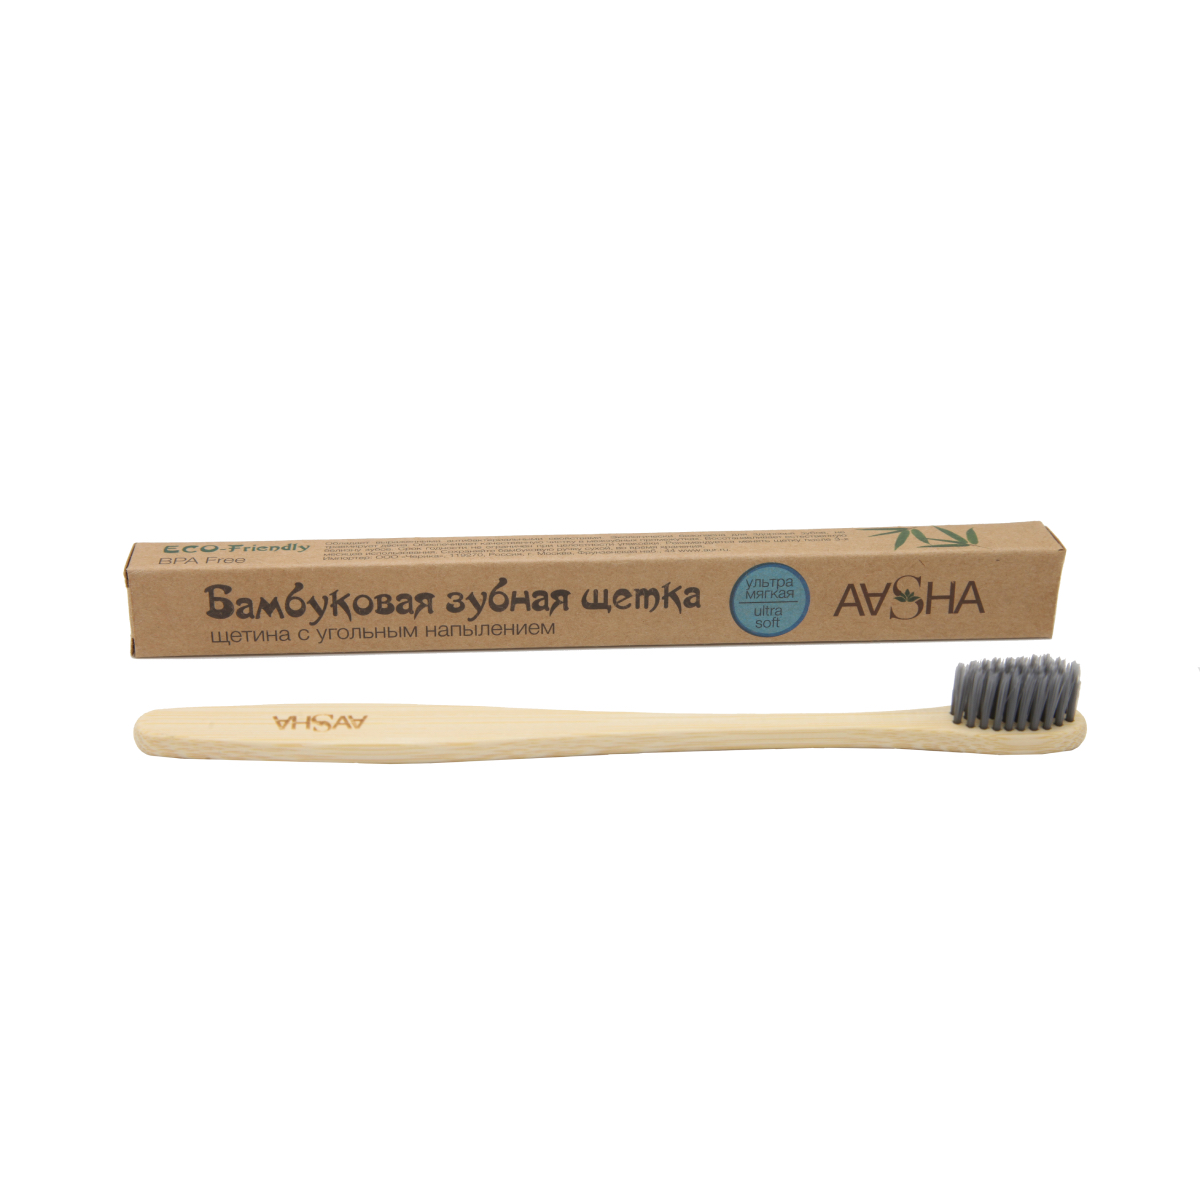 Бамбуковая зубная щетка Aasha с угольным напылением ULTRA SOFT (Ультра мягкая), 1 шт. зубная щетка colgate ultra soft для эффективной чистки ультрамягкая